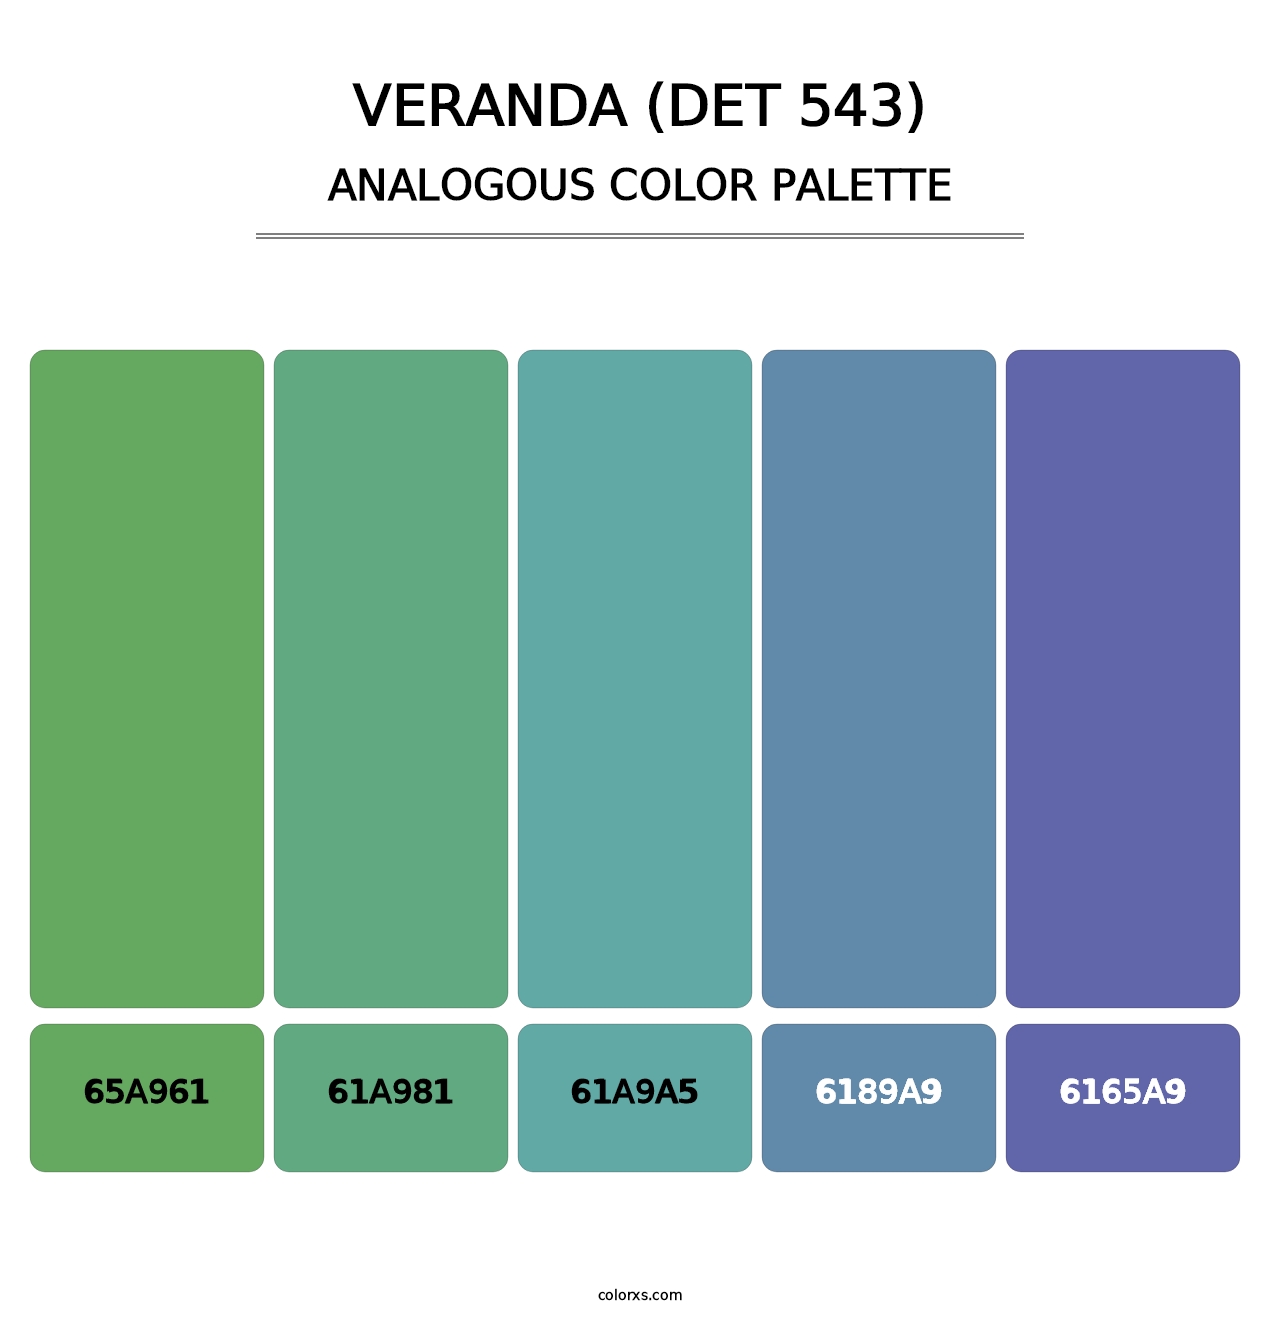 Veranda (DET 543) - Analogous Color Palette